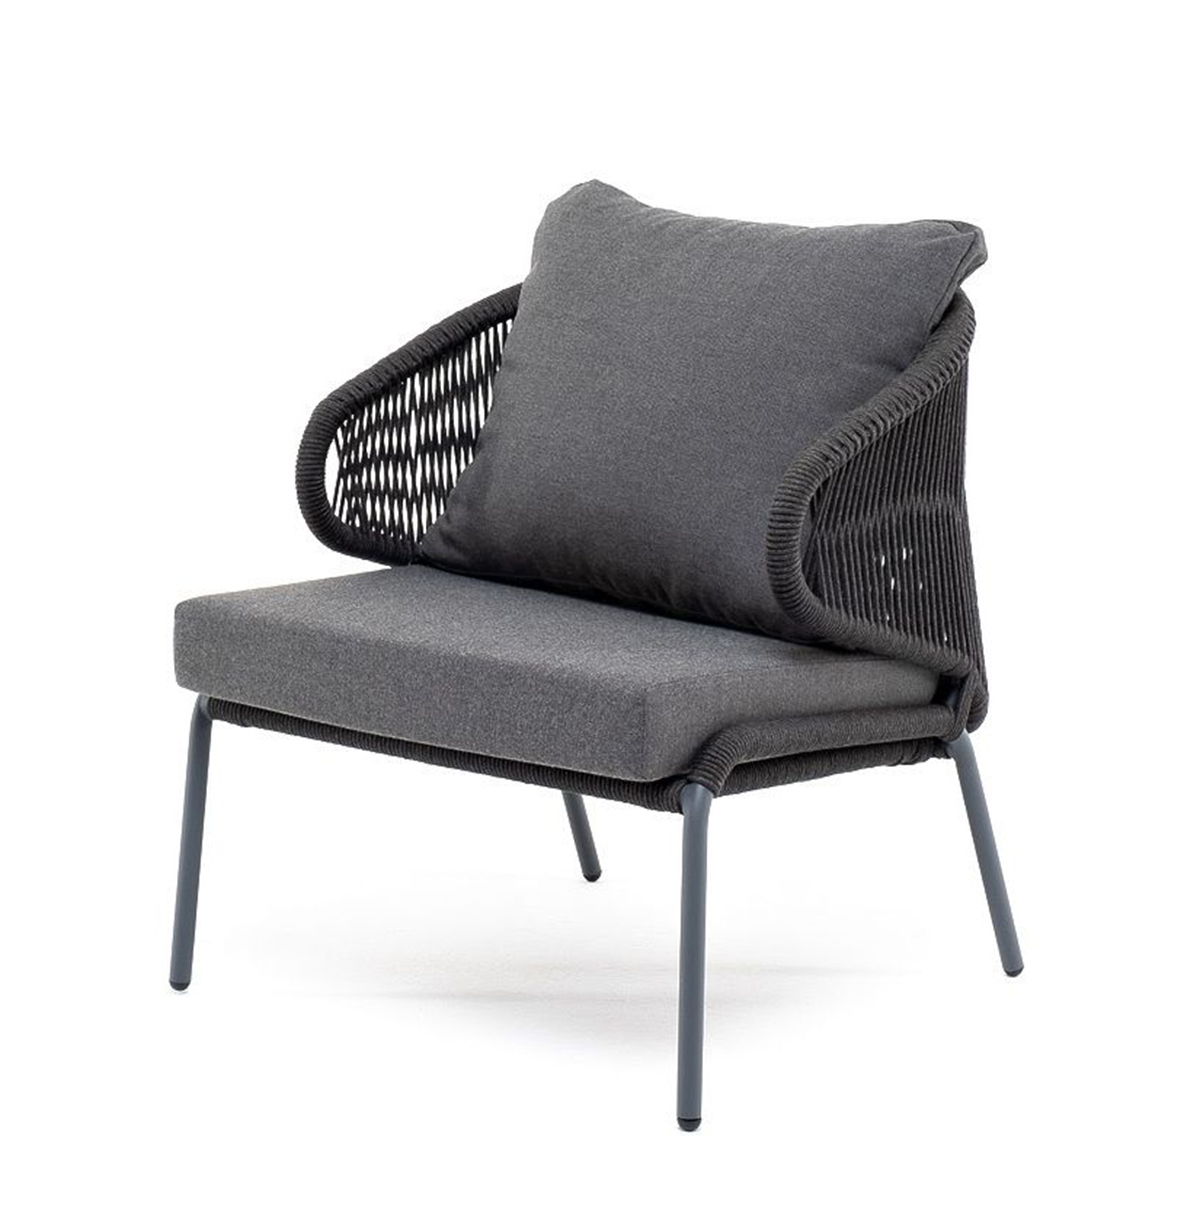 Кресло плетеное Милан темно-серое кресло плетеное милан темно серое